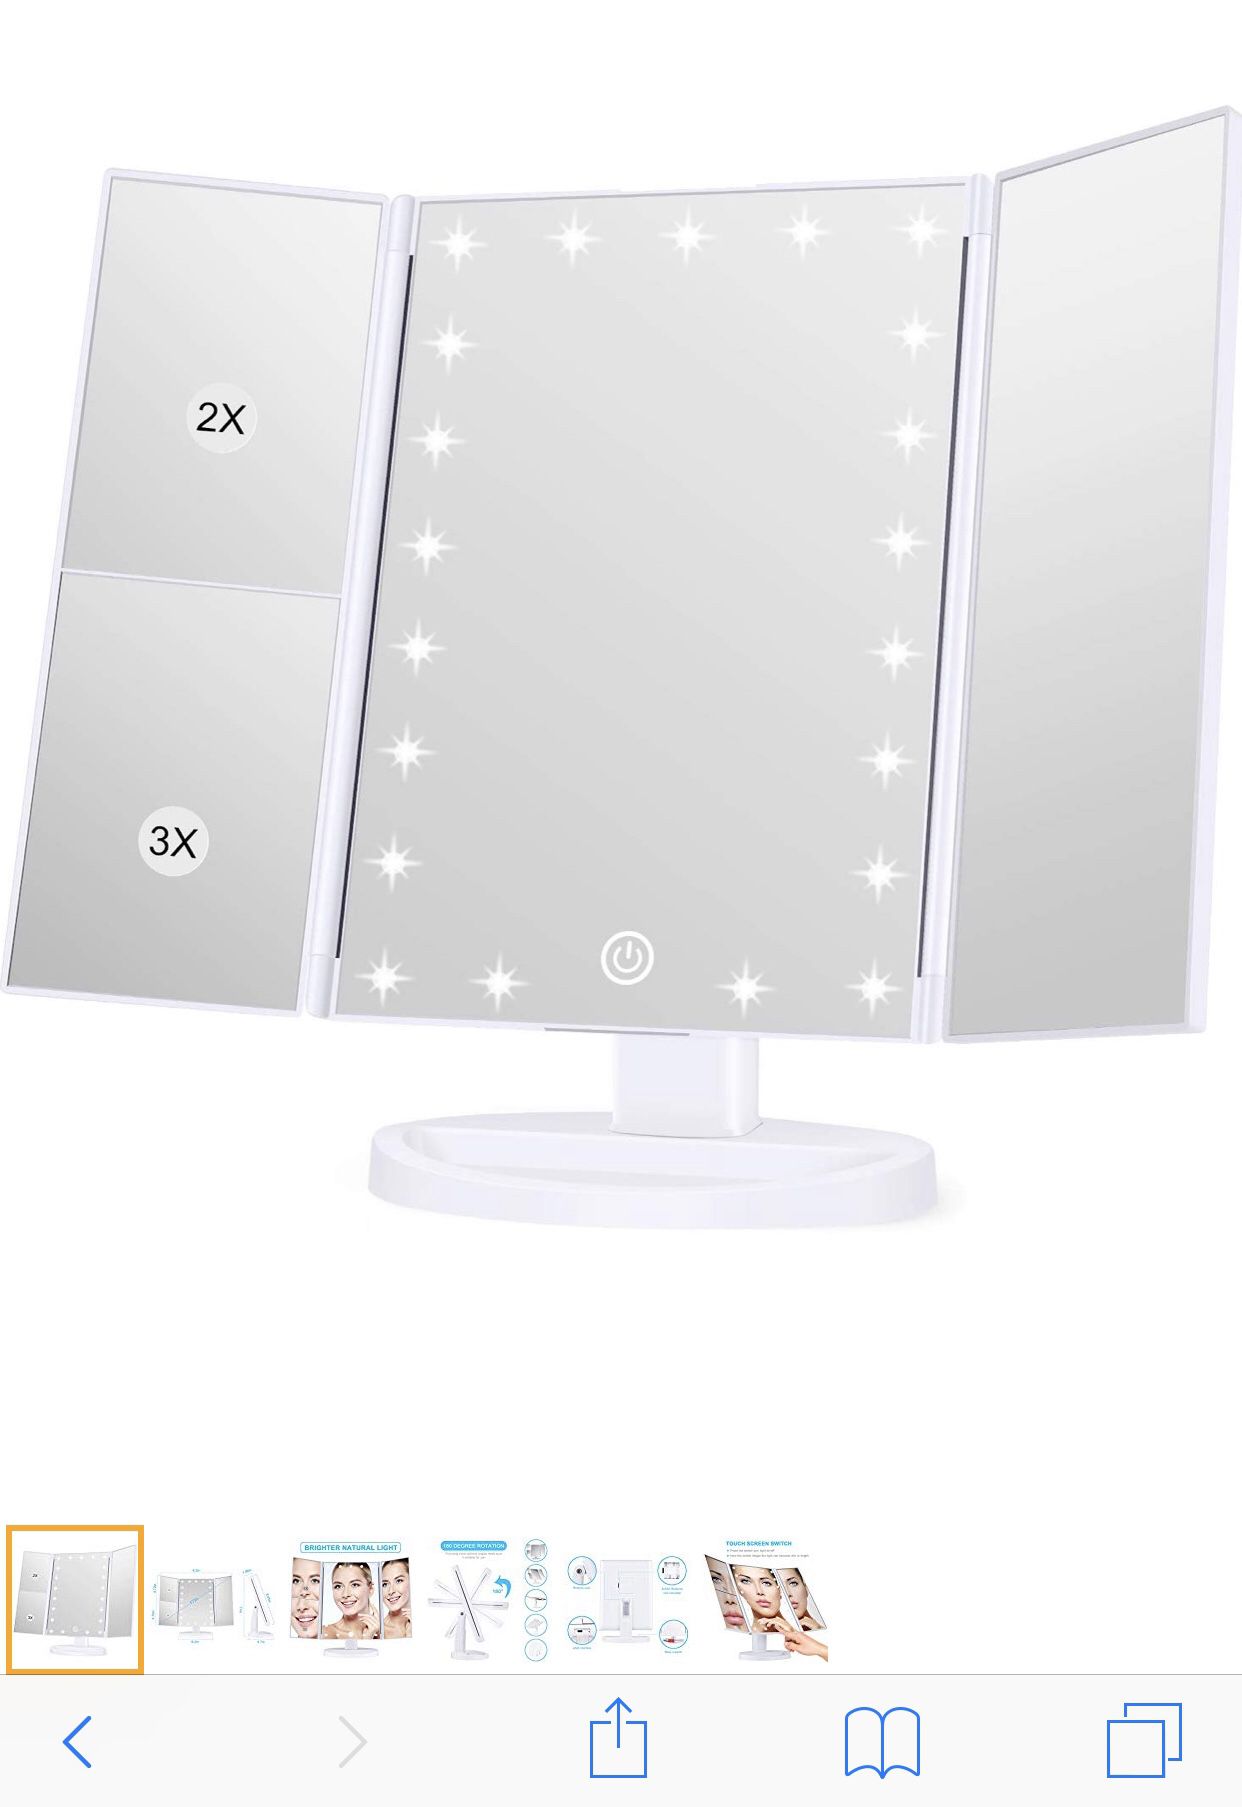 LED makeup Mirror